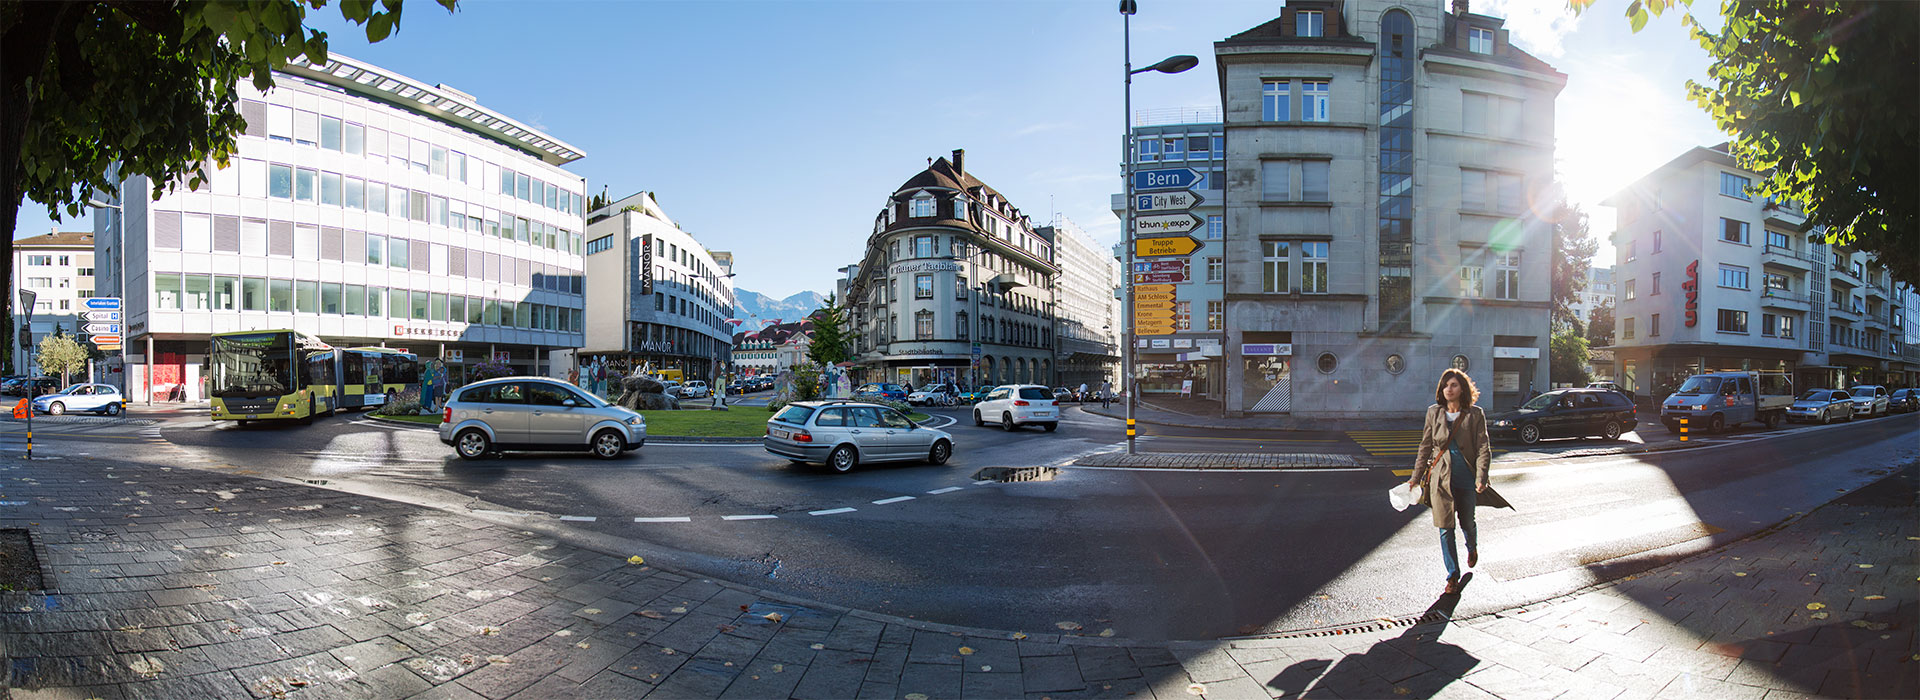 Strassenkreuzung in Thun